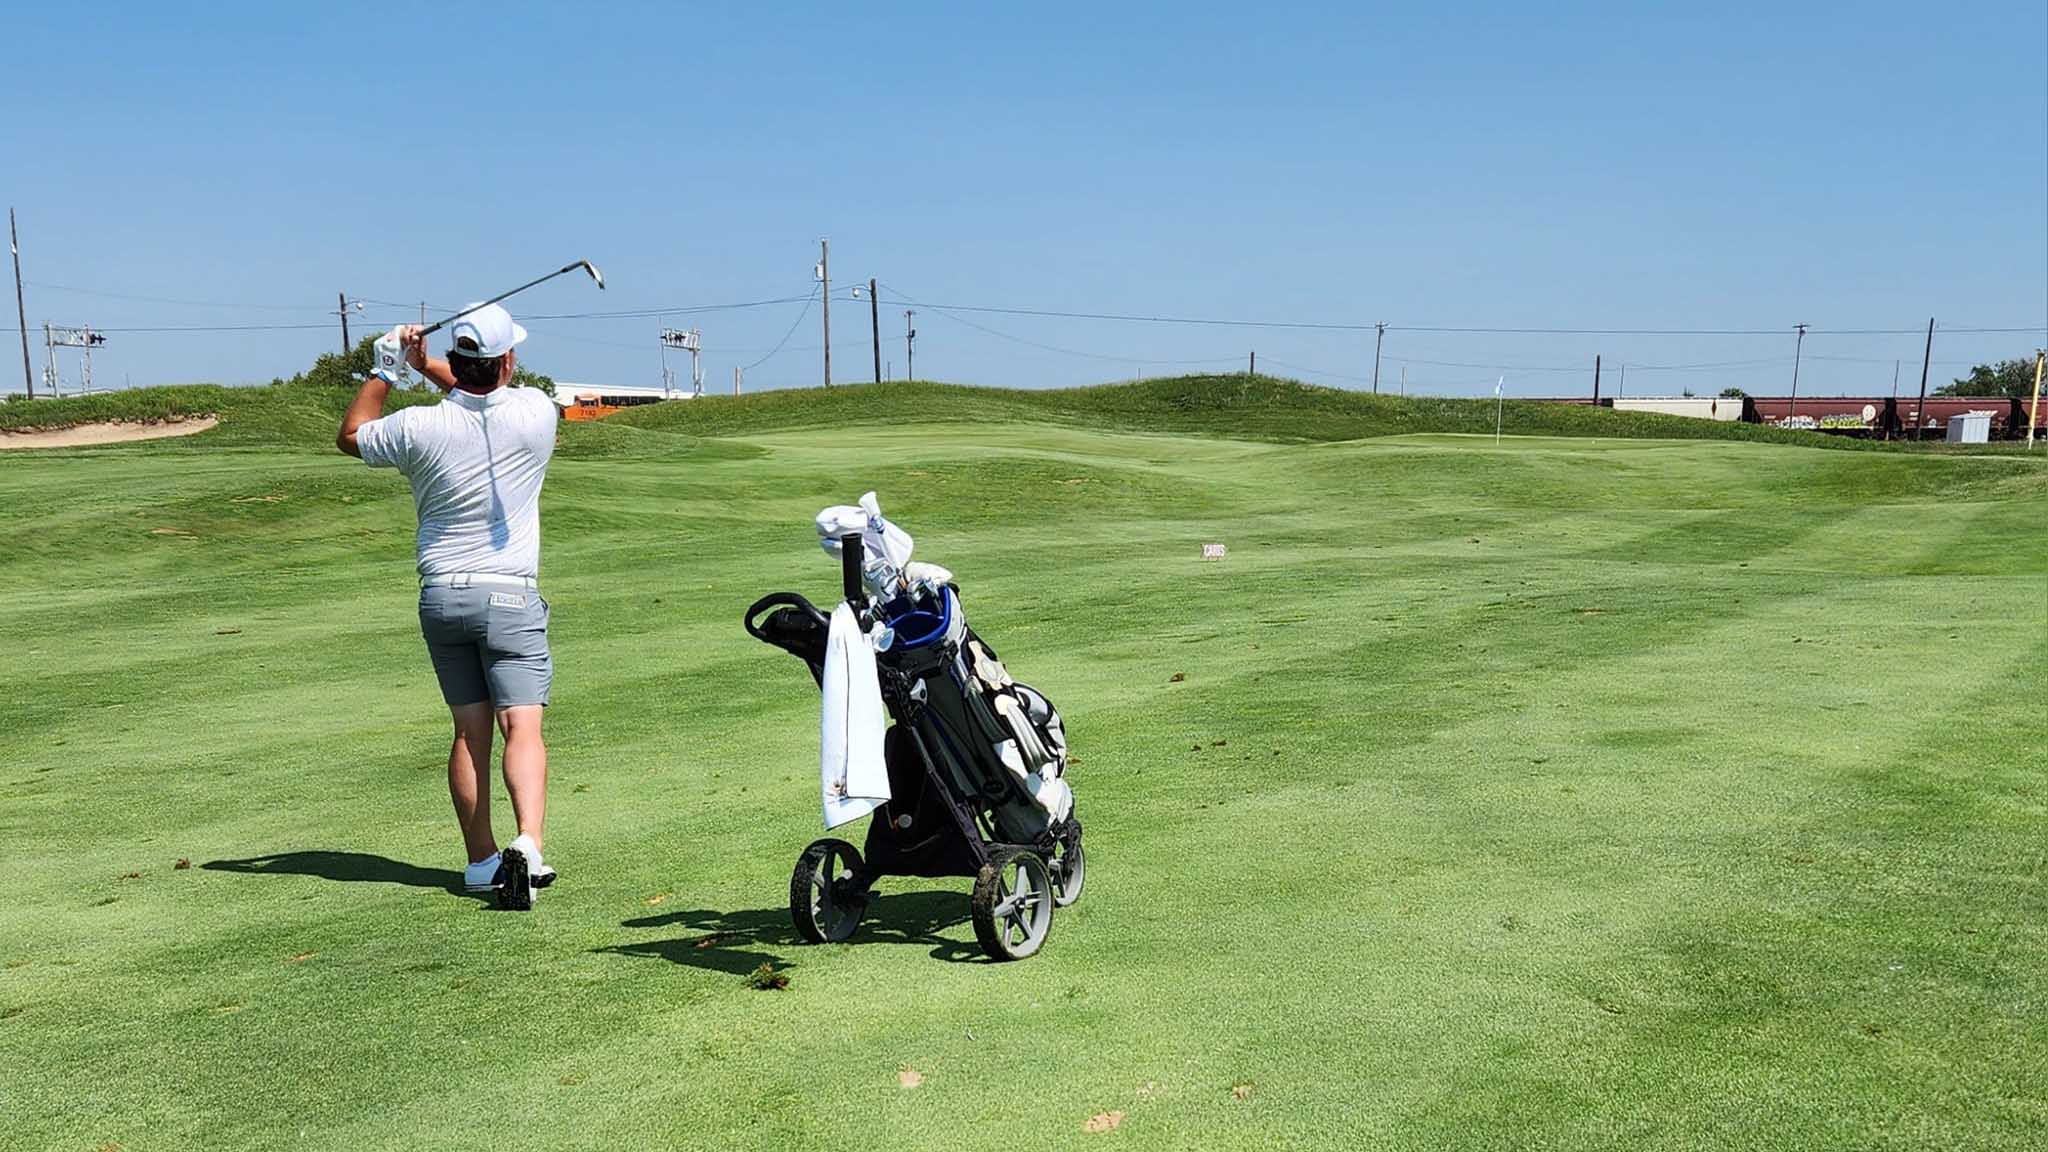 MCC golfers shoot par to regain momentum at National Tournament